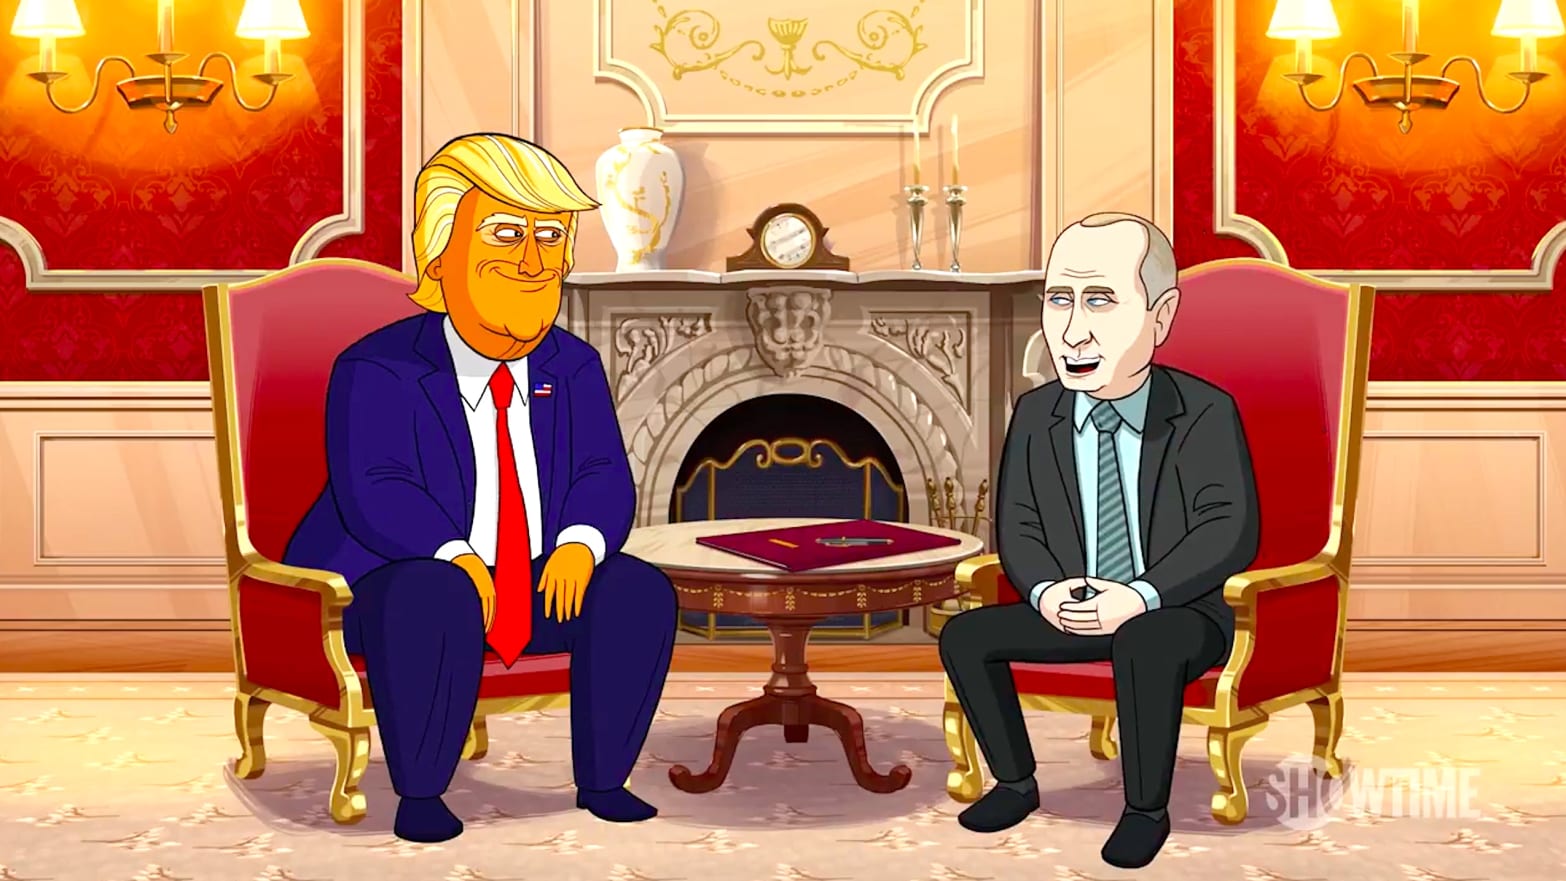 Putin Shows Trump 'Pee Tape' in 'Our Cartoon President' Season 2 Premiere